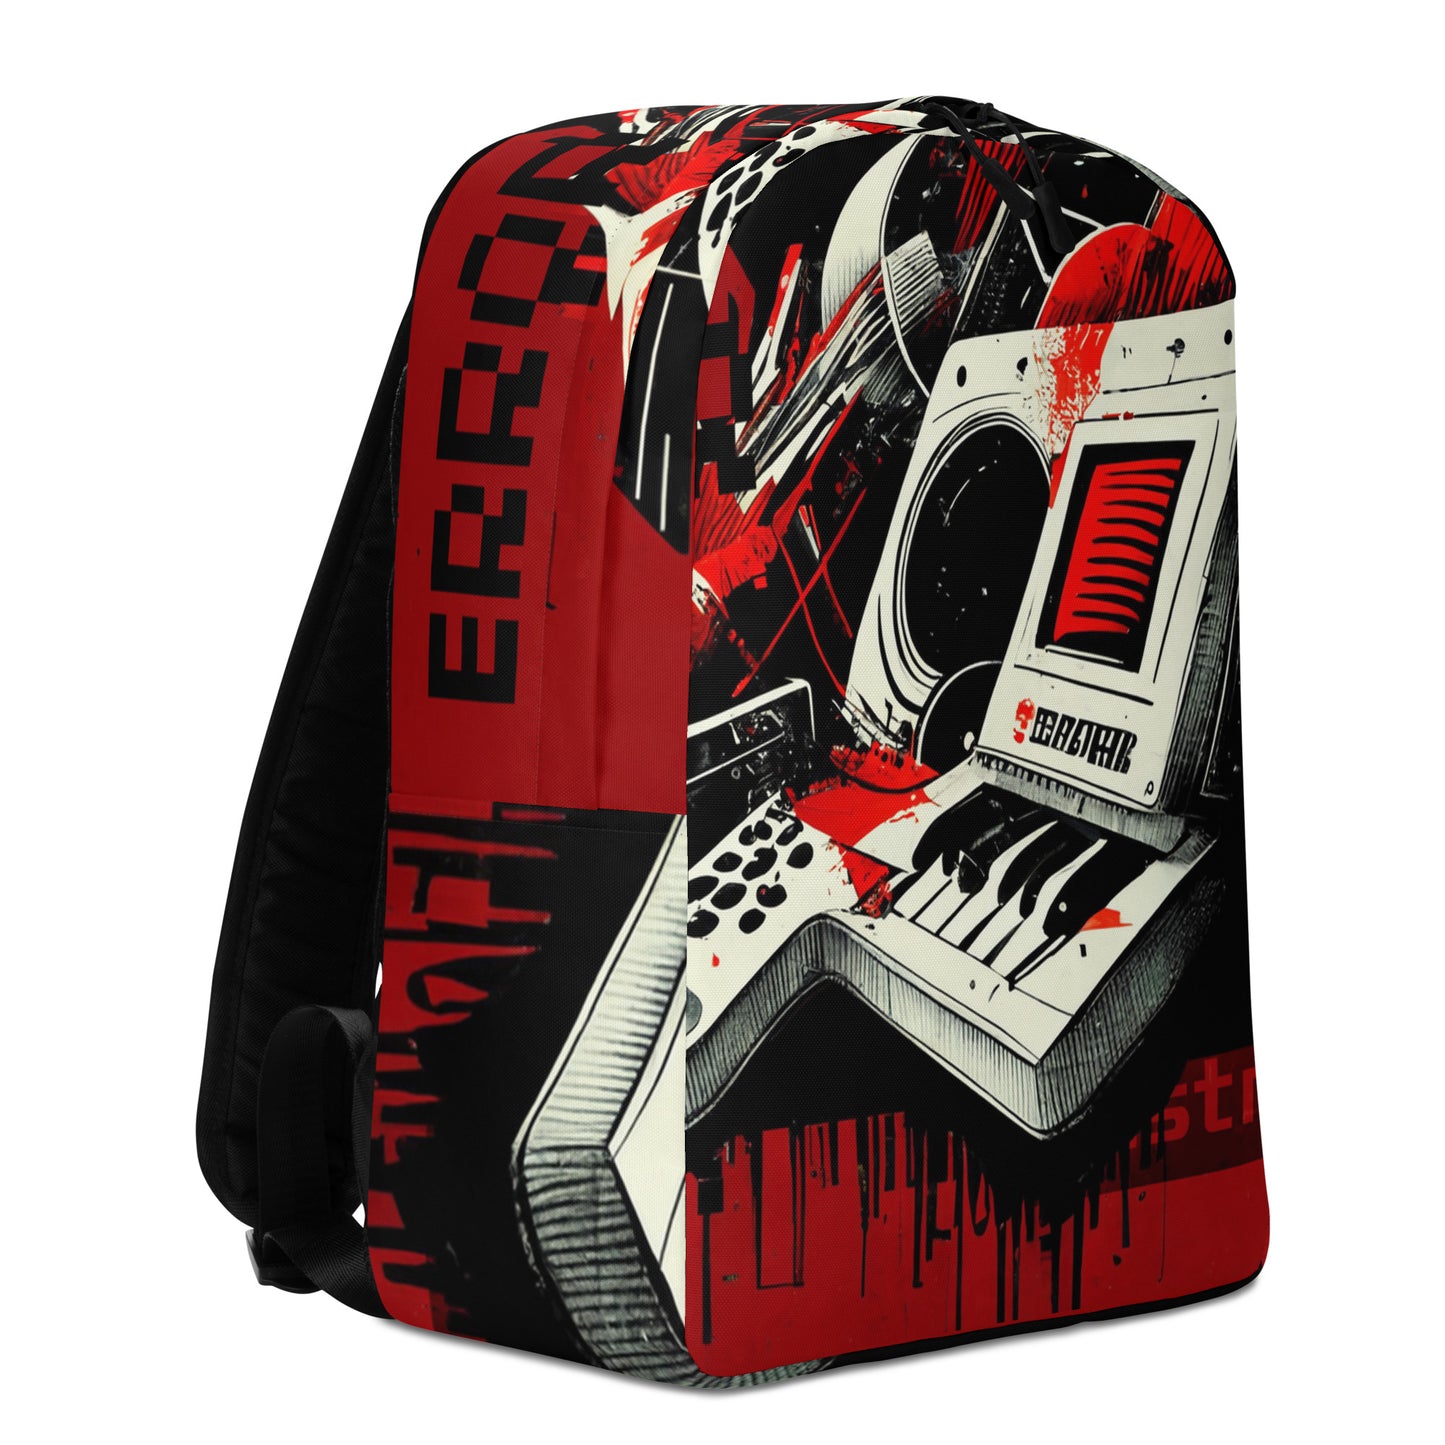 Error Instruments Gigbag / Gearpack / Minimalist Backpack